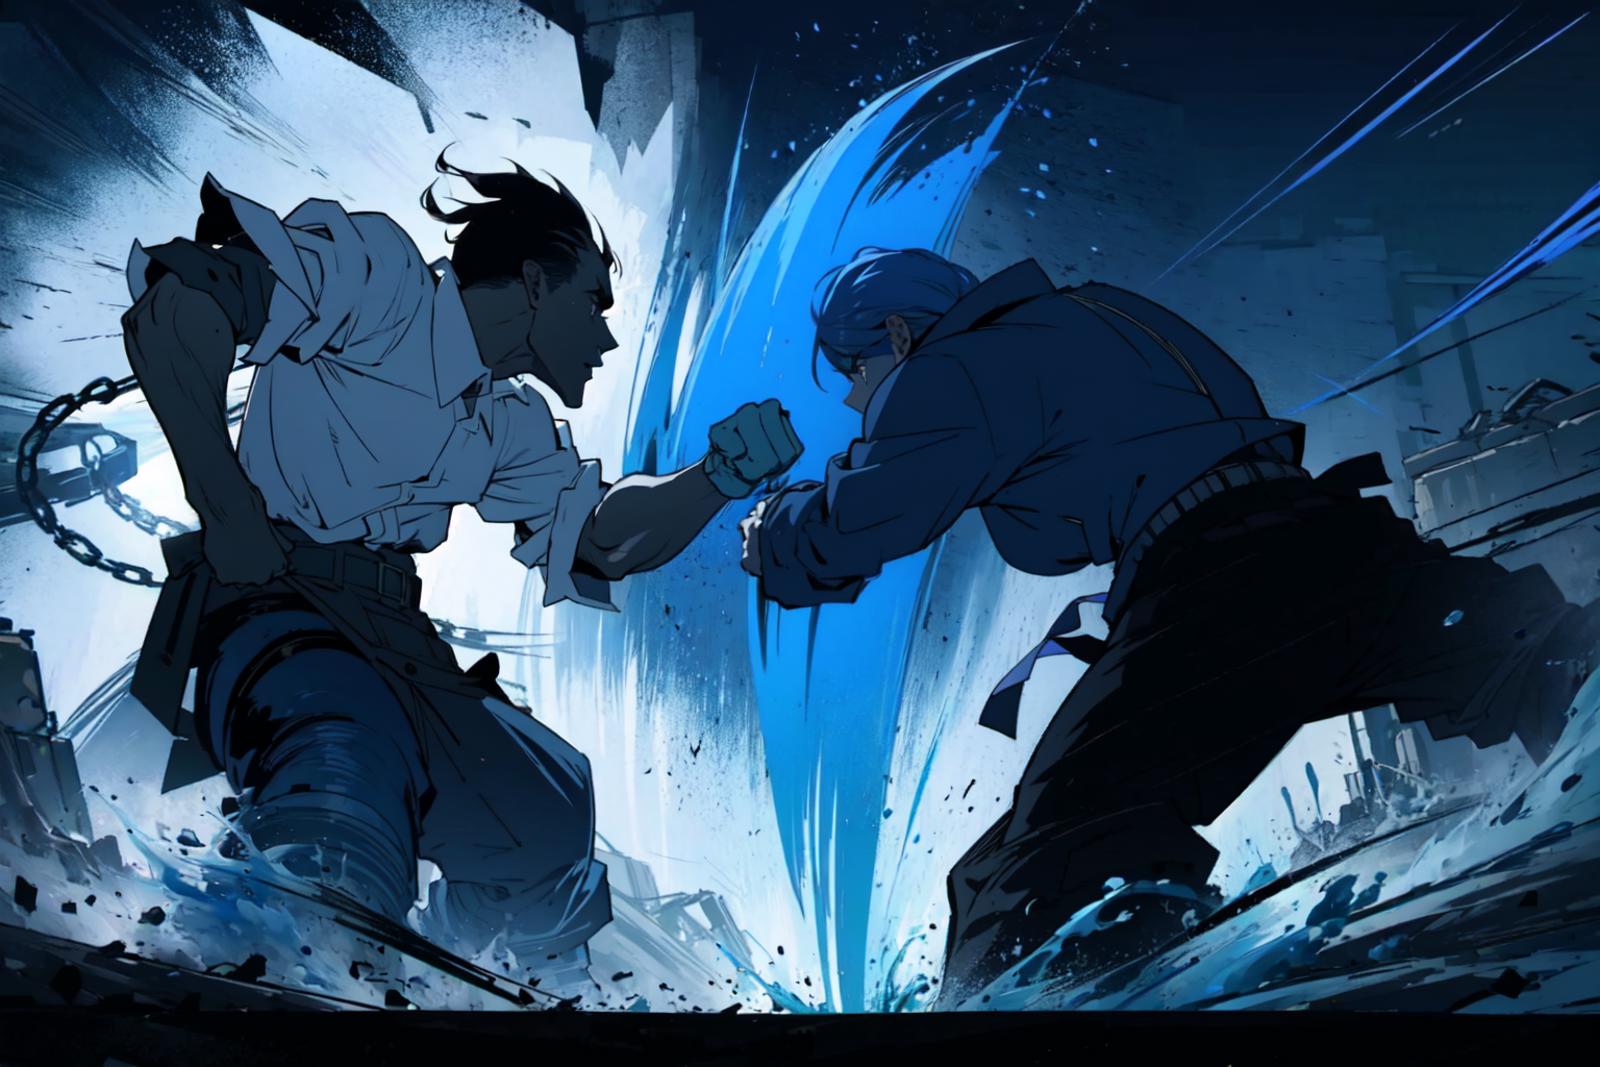 Fight scene image by Junbegun